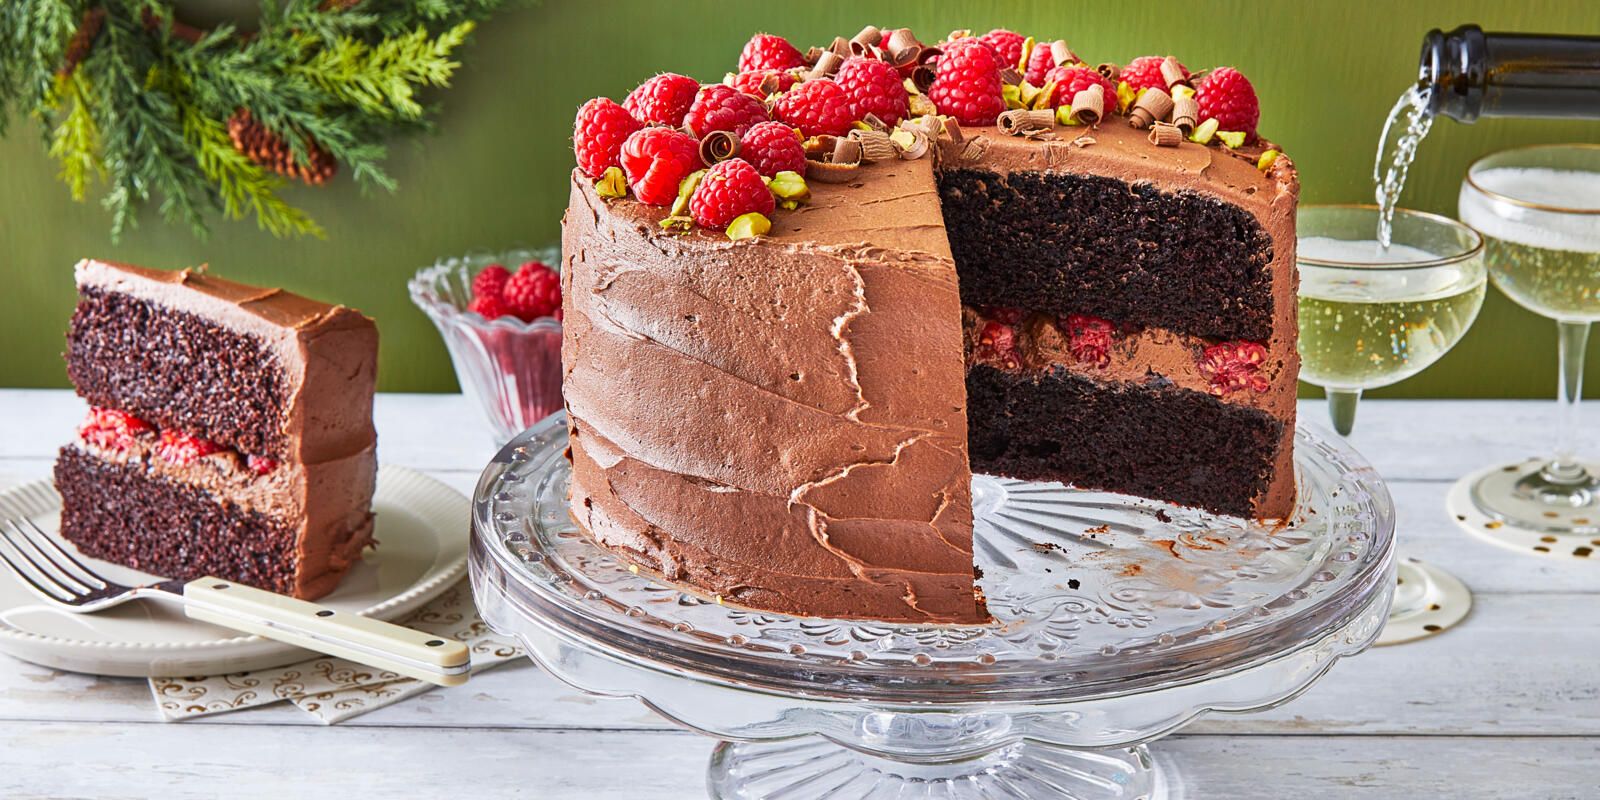 Easy Chocolate Cake With Raspberries - Sugar et al